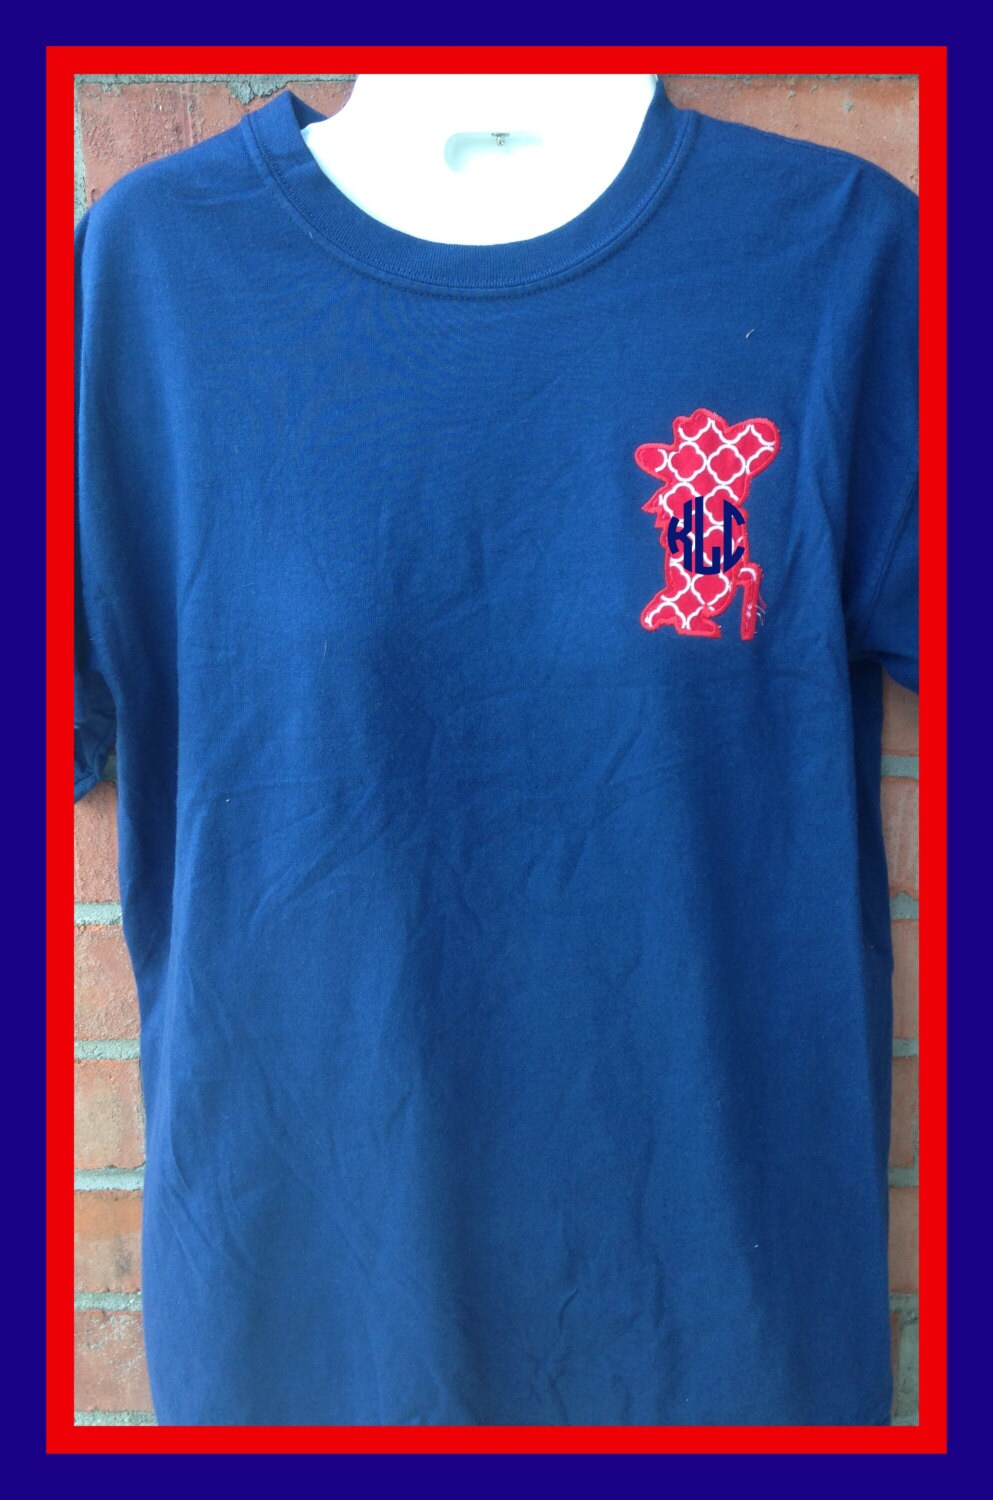 Comfort Color Colonel Rebel Applique Tshirt by BlueSuedeStitches